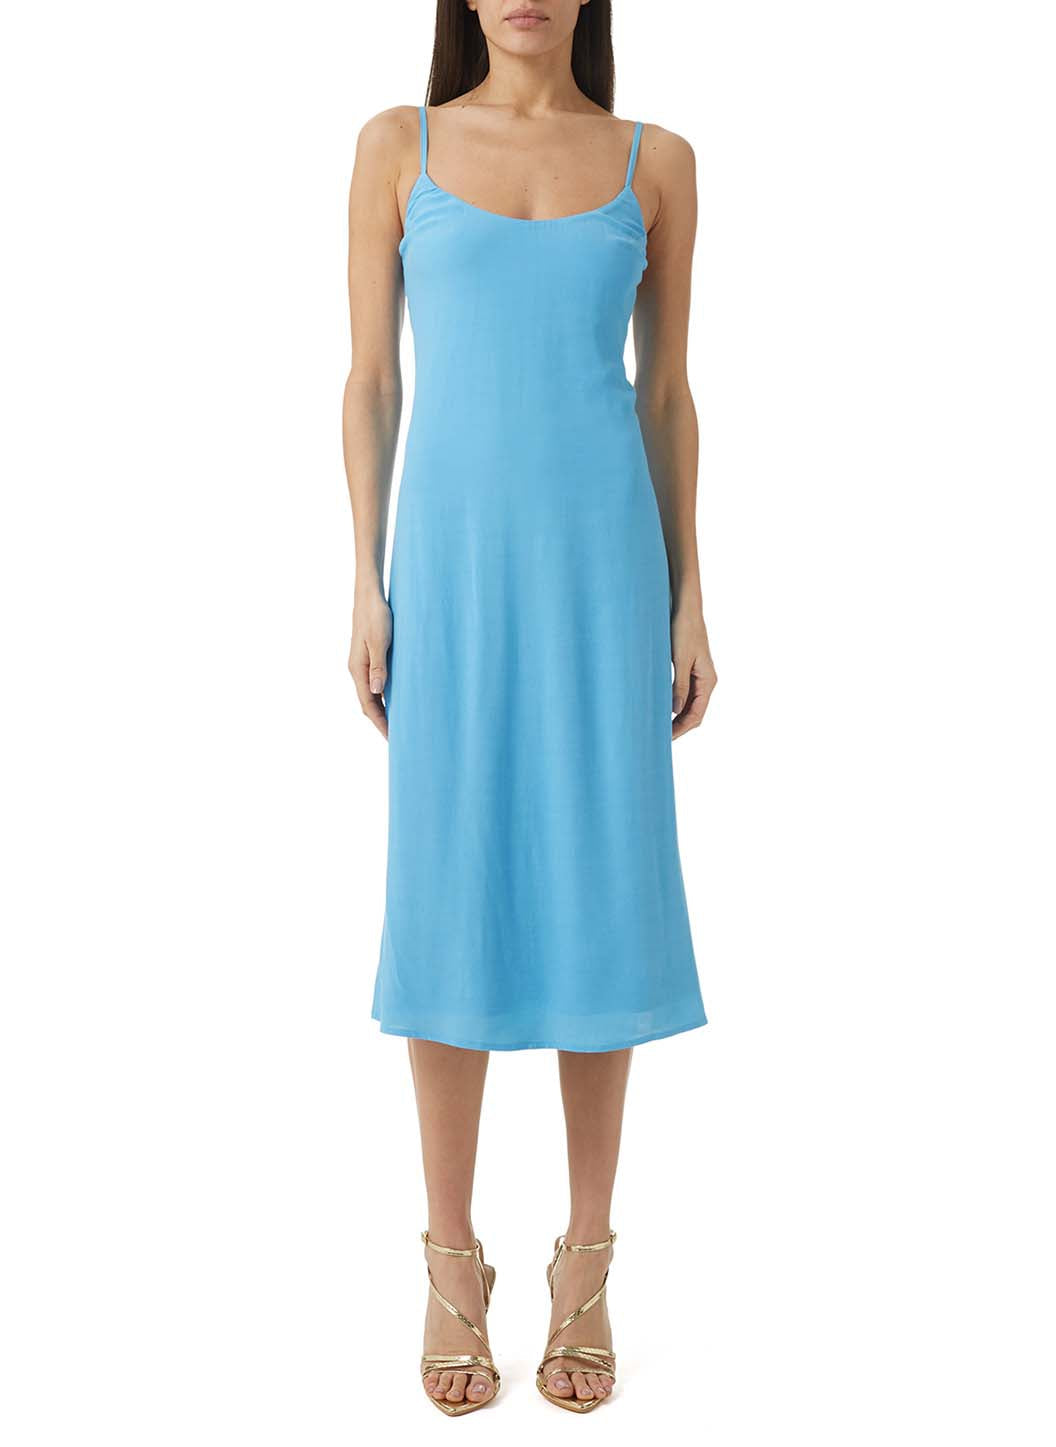 Primrose Blue Crepe Dress